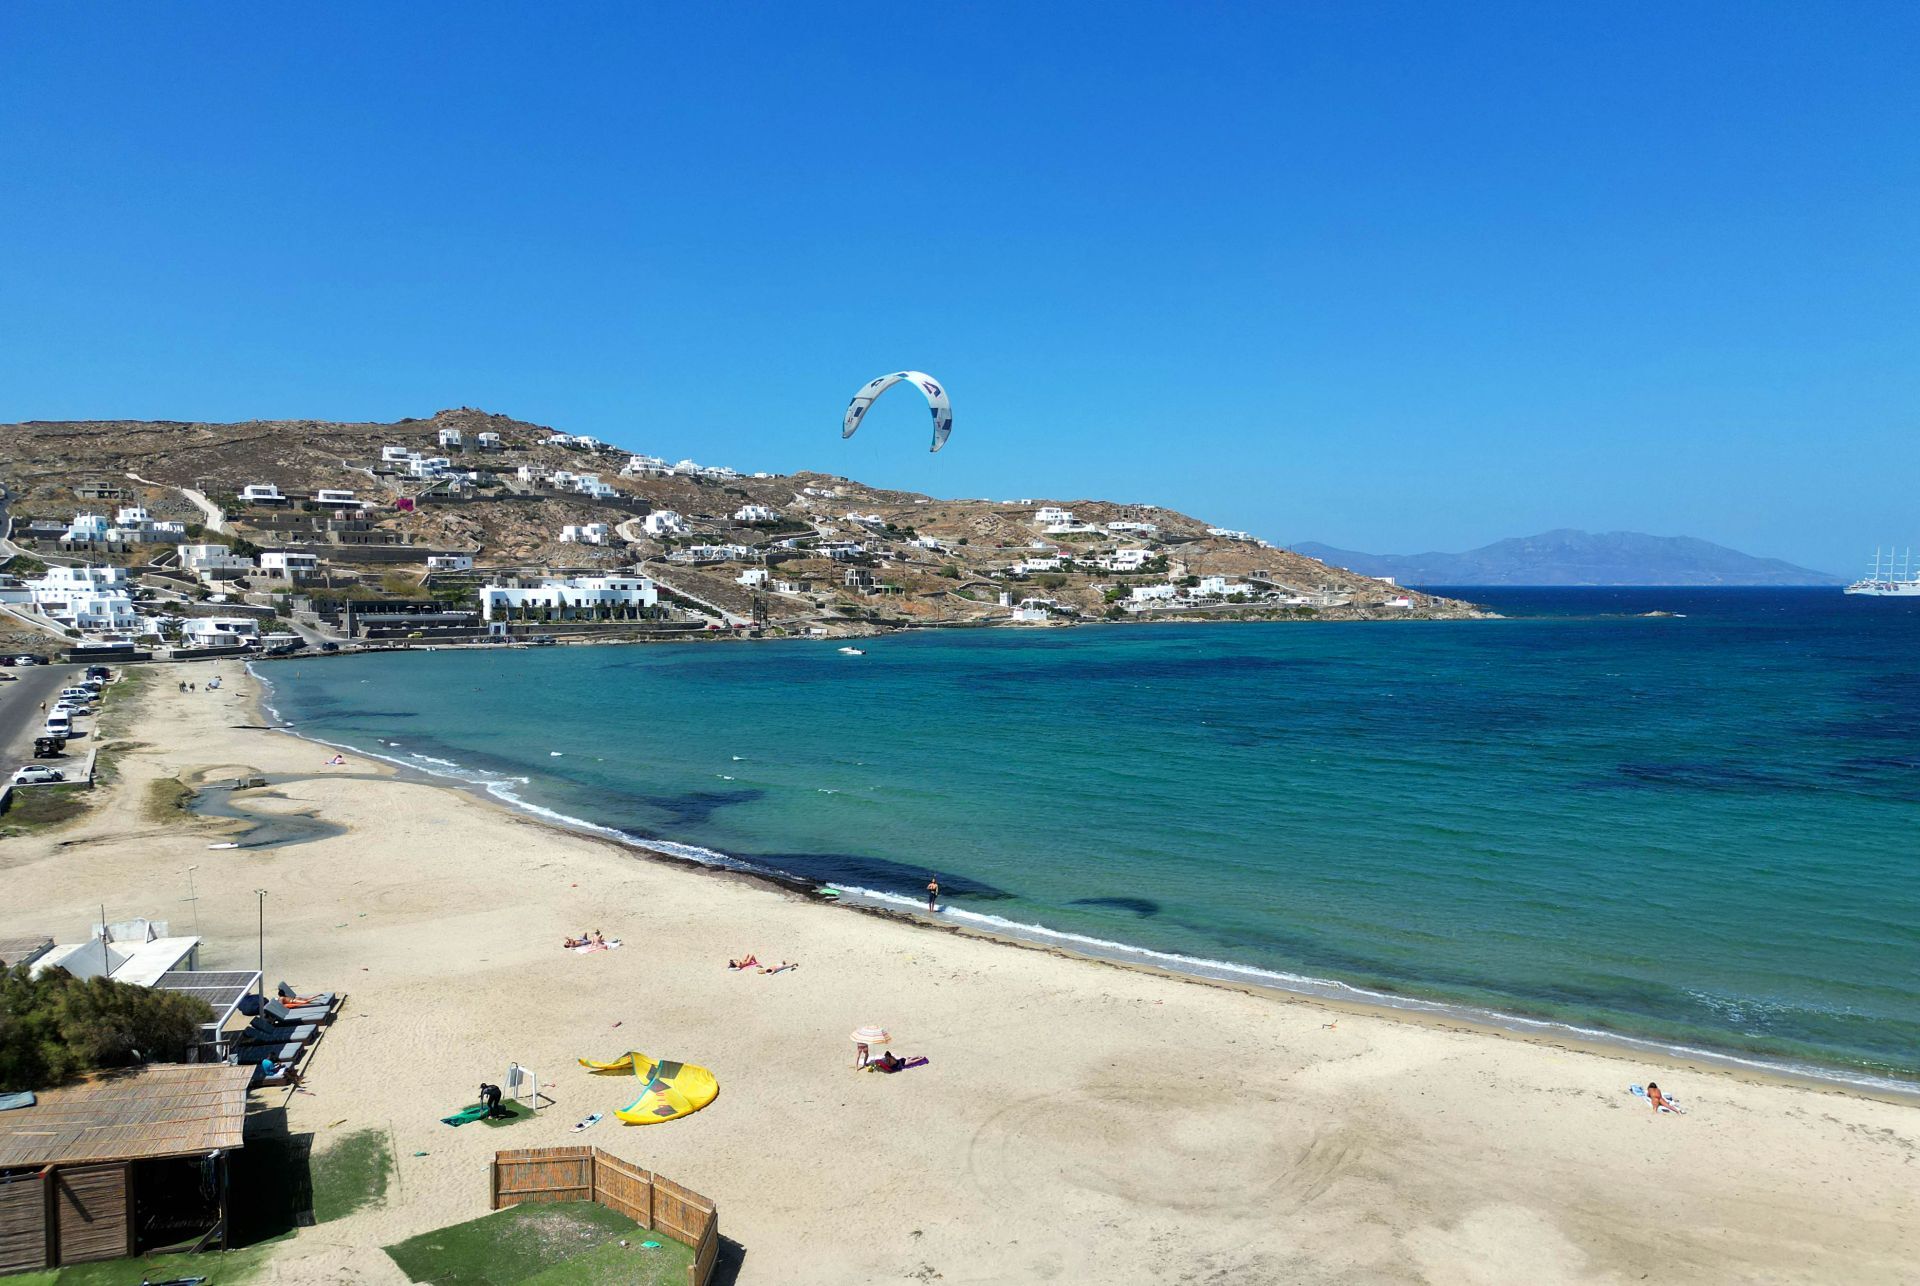 Kitesurfing in Korfos Beach, one of the windiest areas of Mykonos